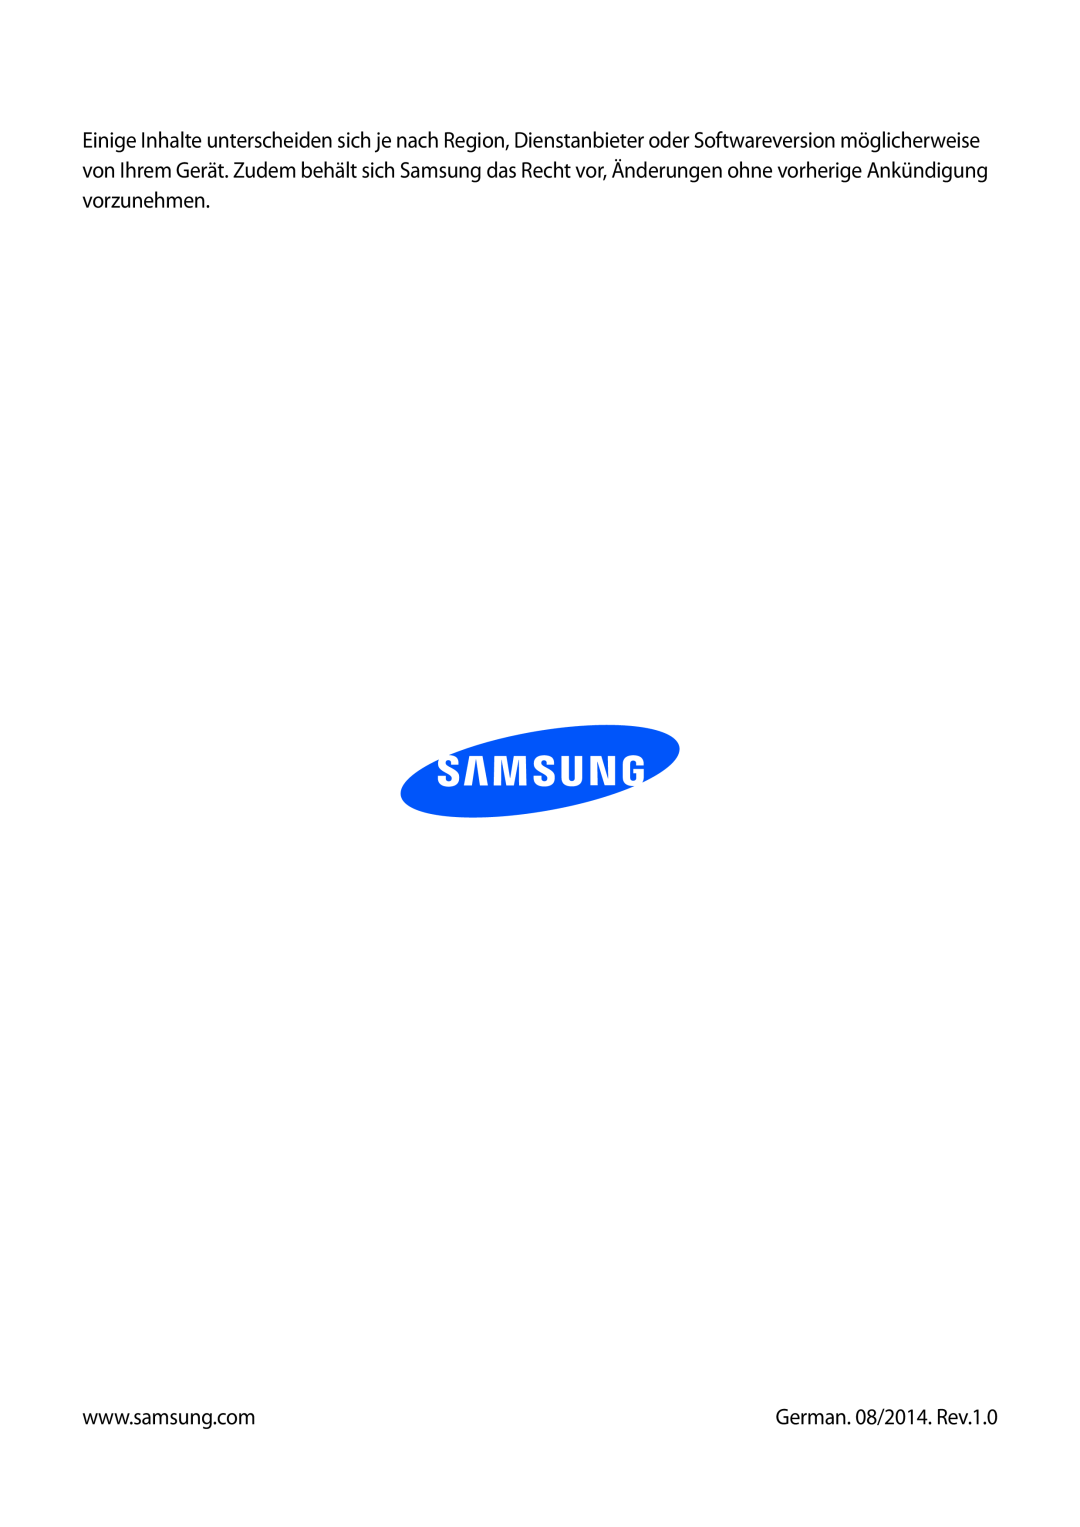 Samsung SM-T3100MKEATO, SM-T3100ZWAXEO, SM-T3100ZWATUR, SM-T3100ZWAATO, SM-T3100GNATUR manual German. 08/2014. Rev.1.0 